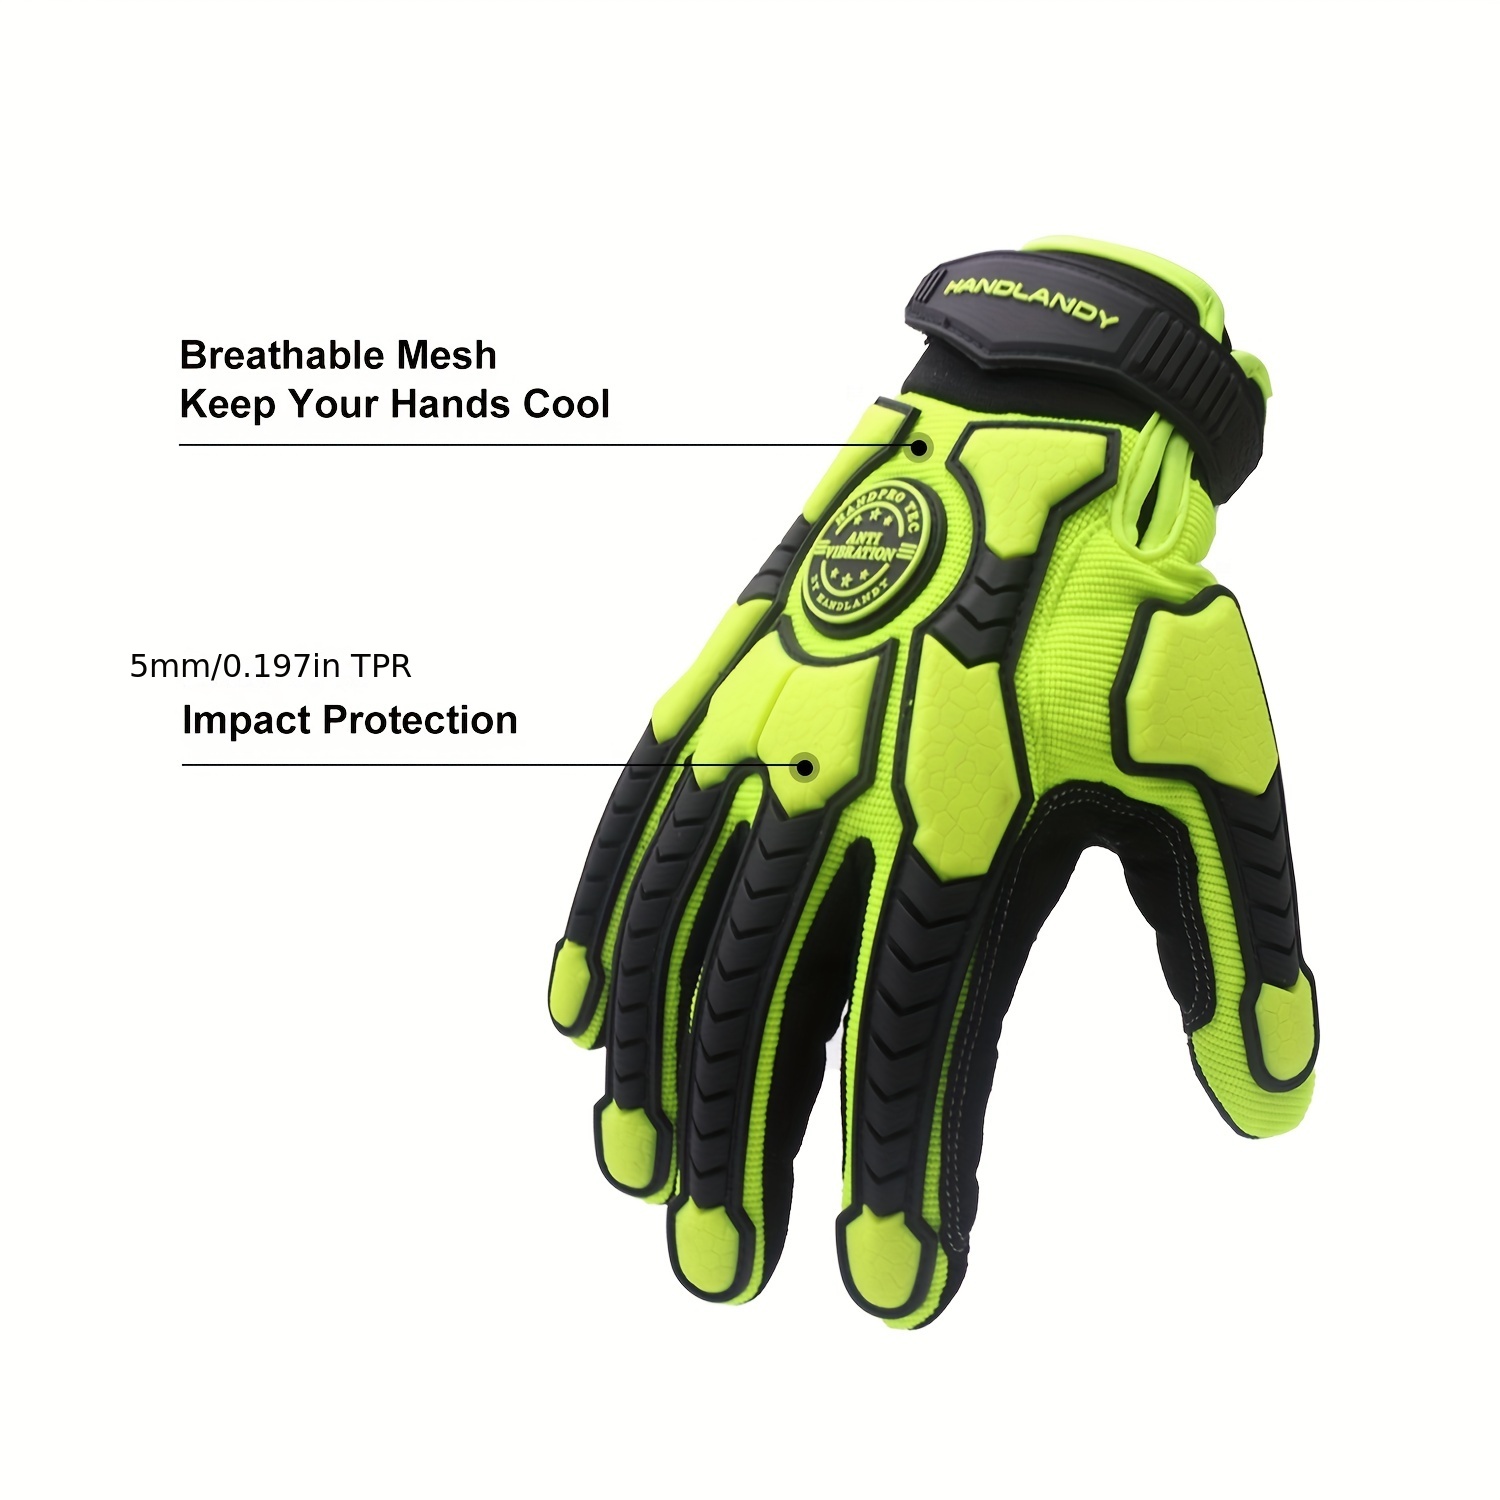 SAFEGEAR Impact-Reducing Mechanics Gloves X-Large, 1 Pair - EN388 & ANSI  Level A1 Cut-Resistant Black & Lime Green Work Gloves for Men and Women 